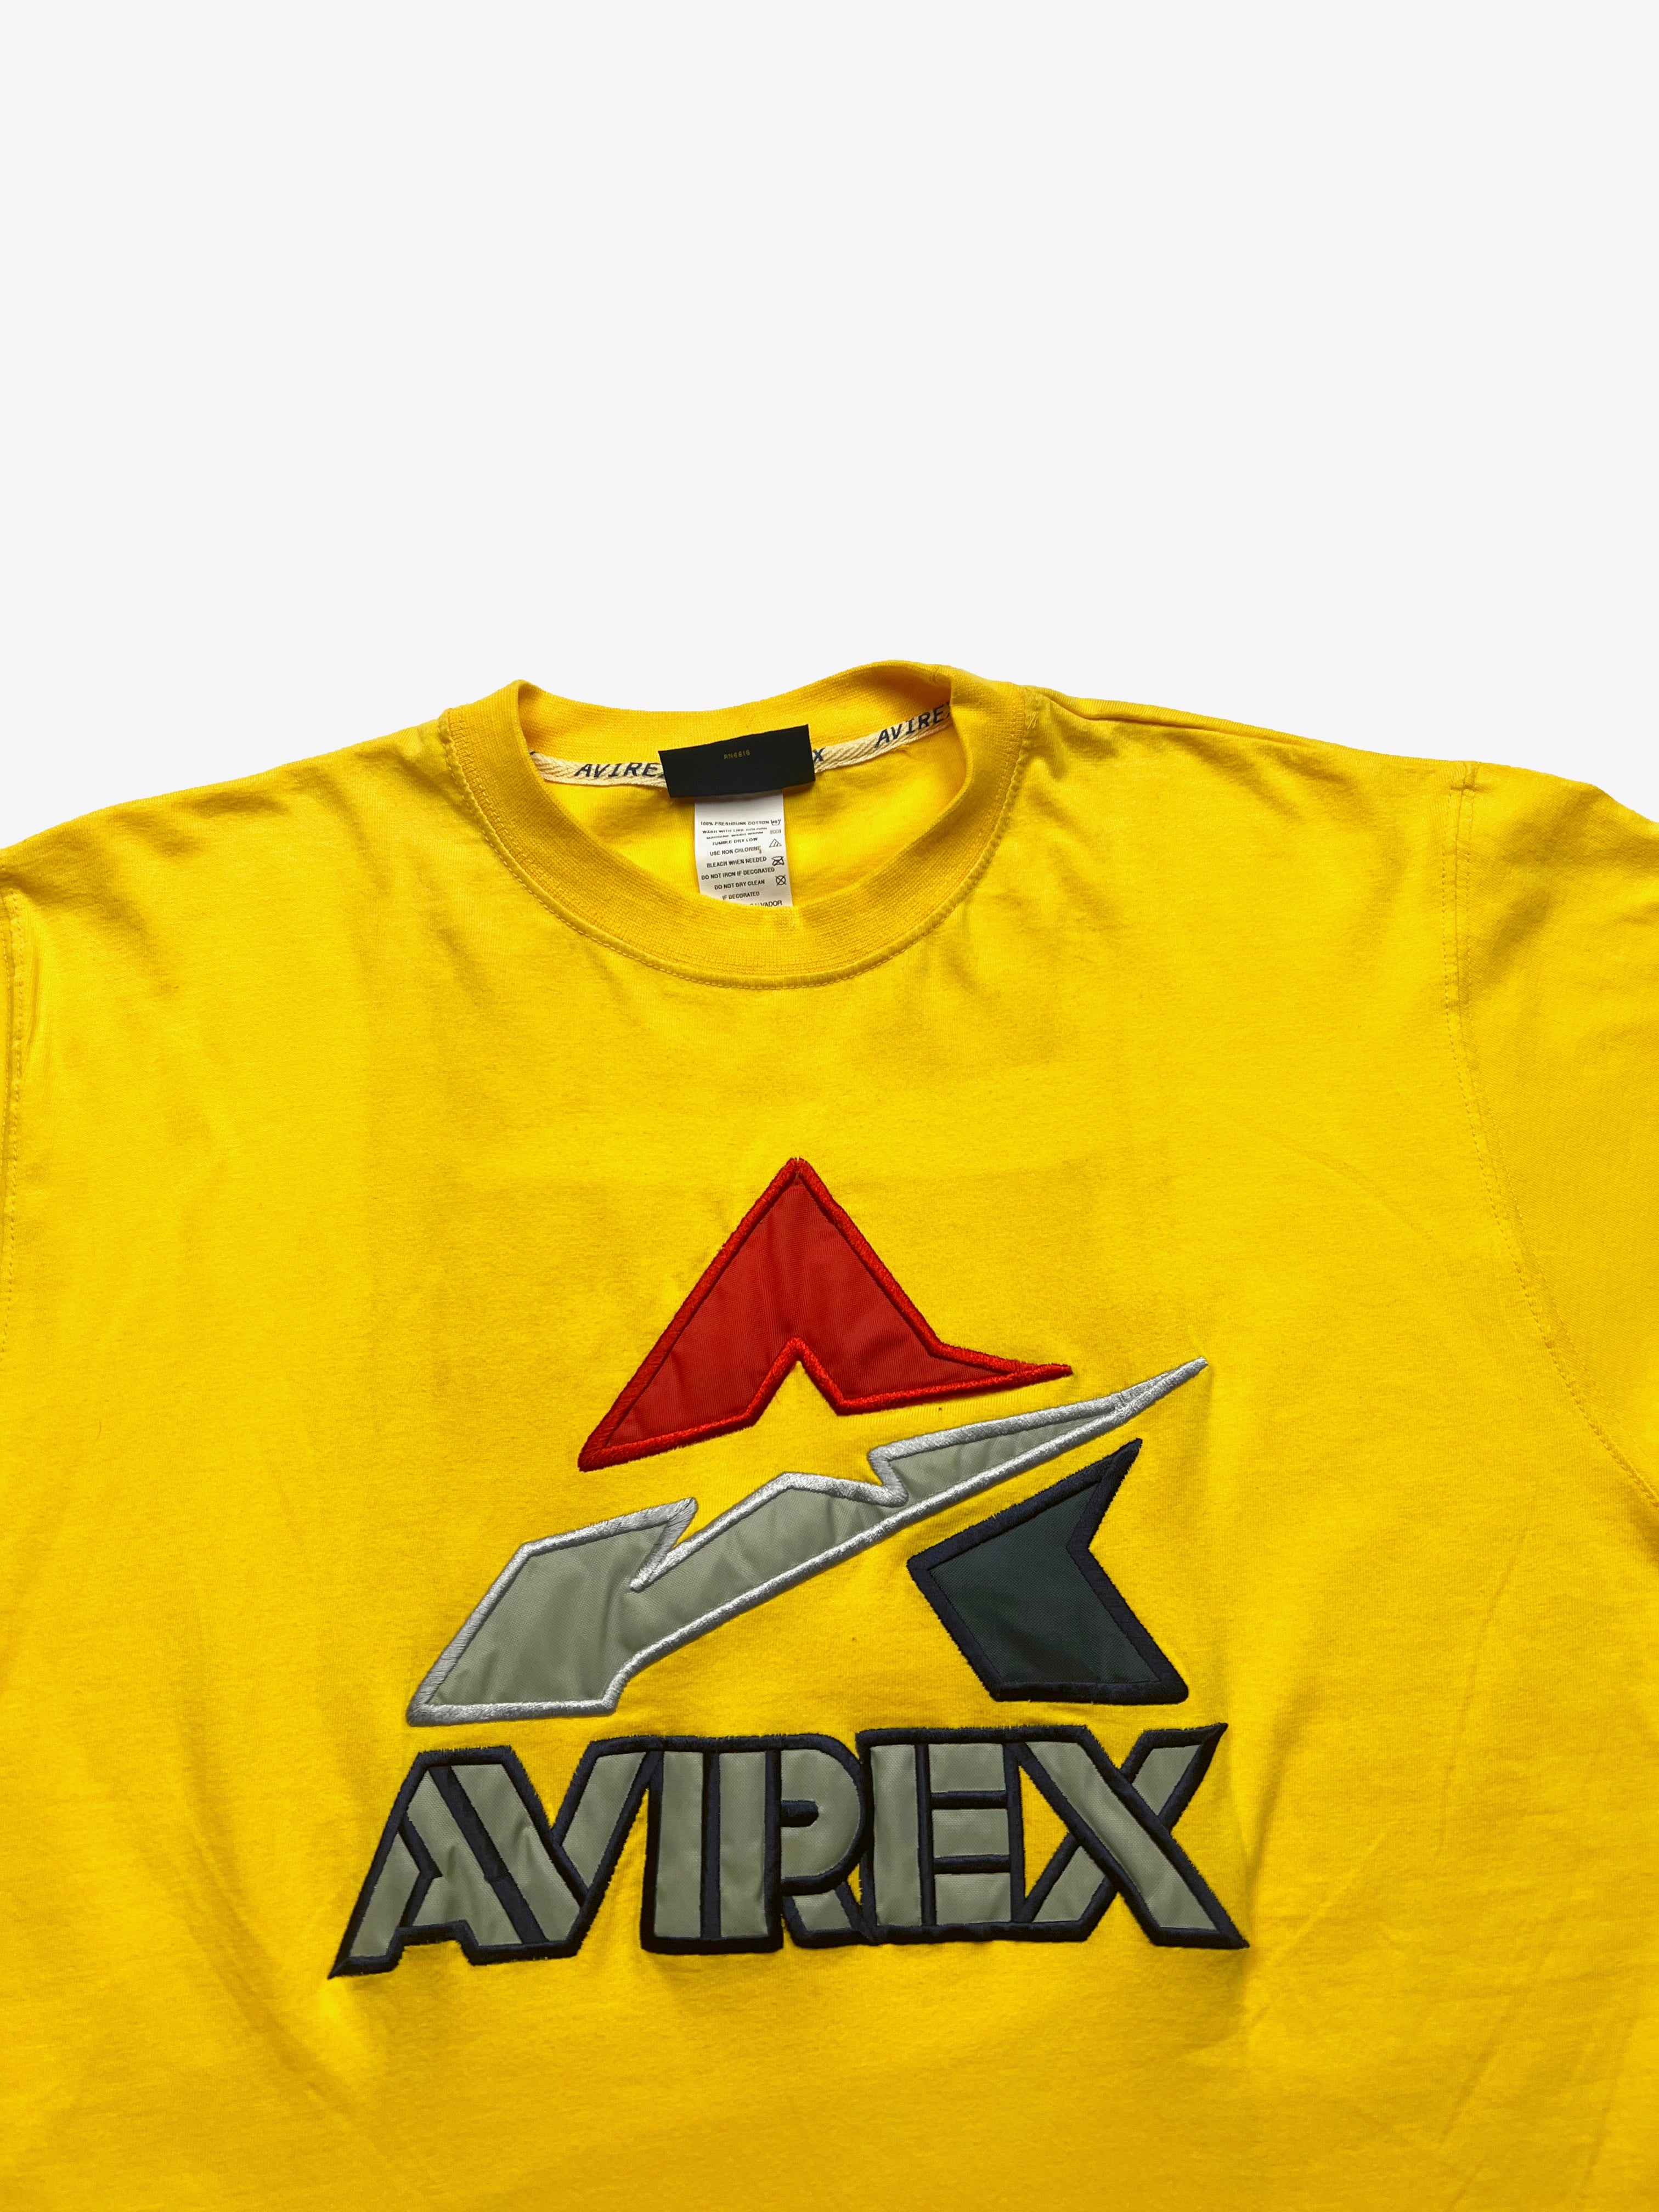 Avirex Yellow Spell Out T-shirt 90's